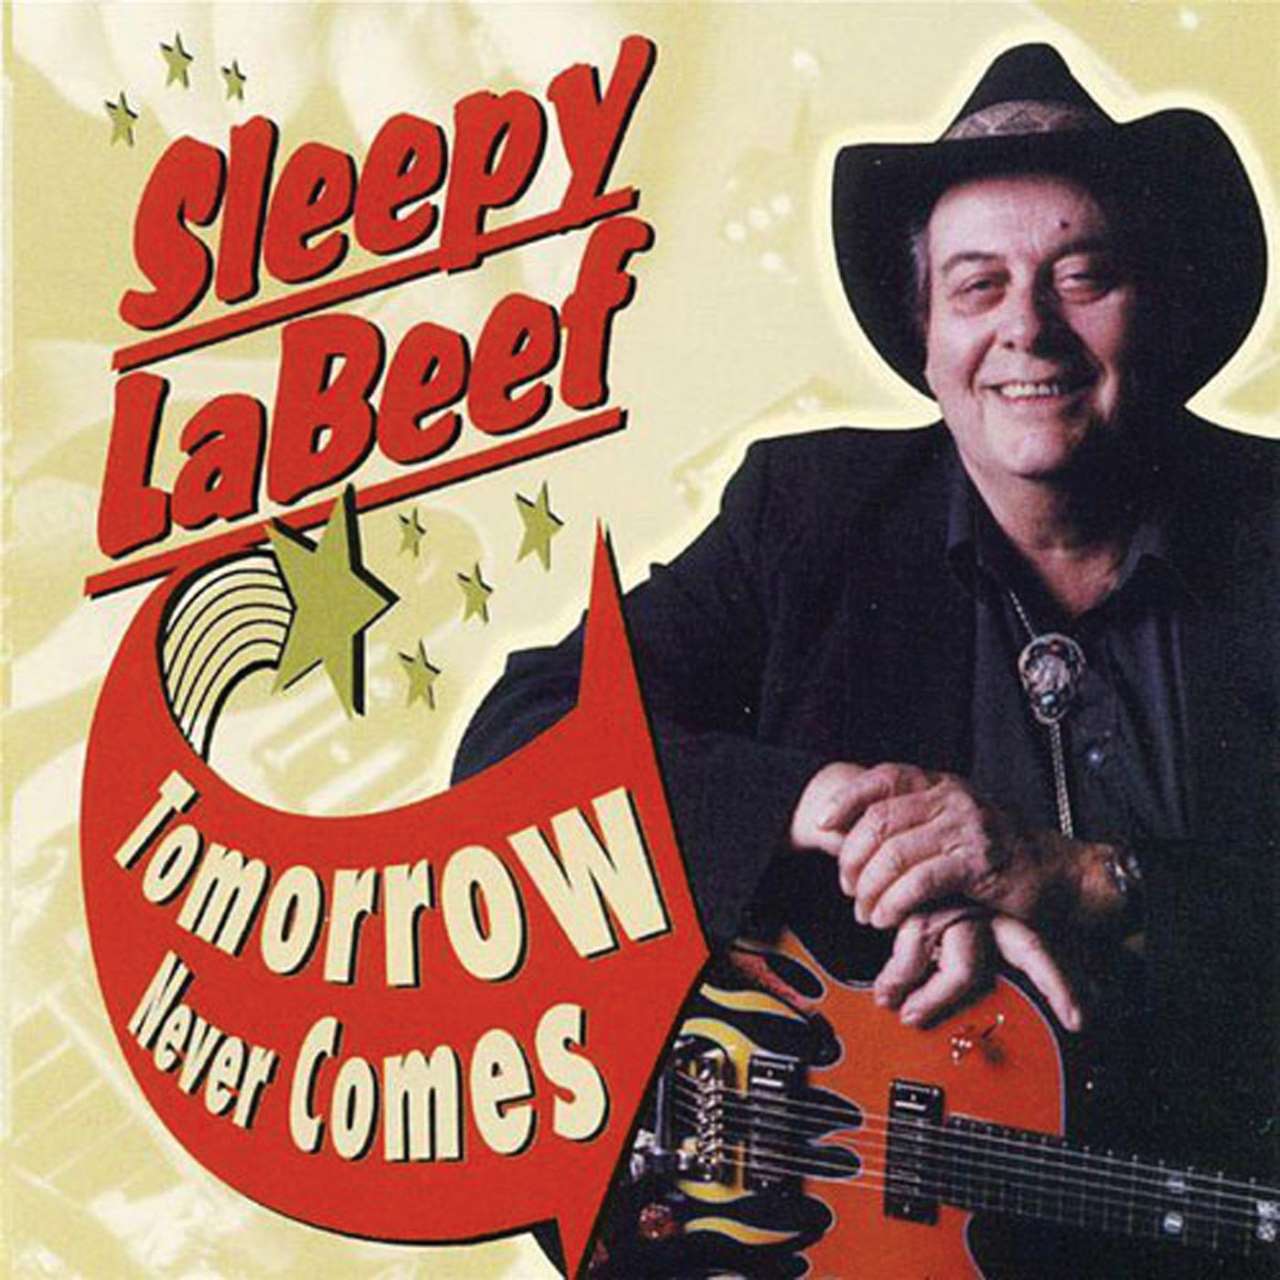 Sleepy Labeef - Tomorrow Never Comes cover album